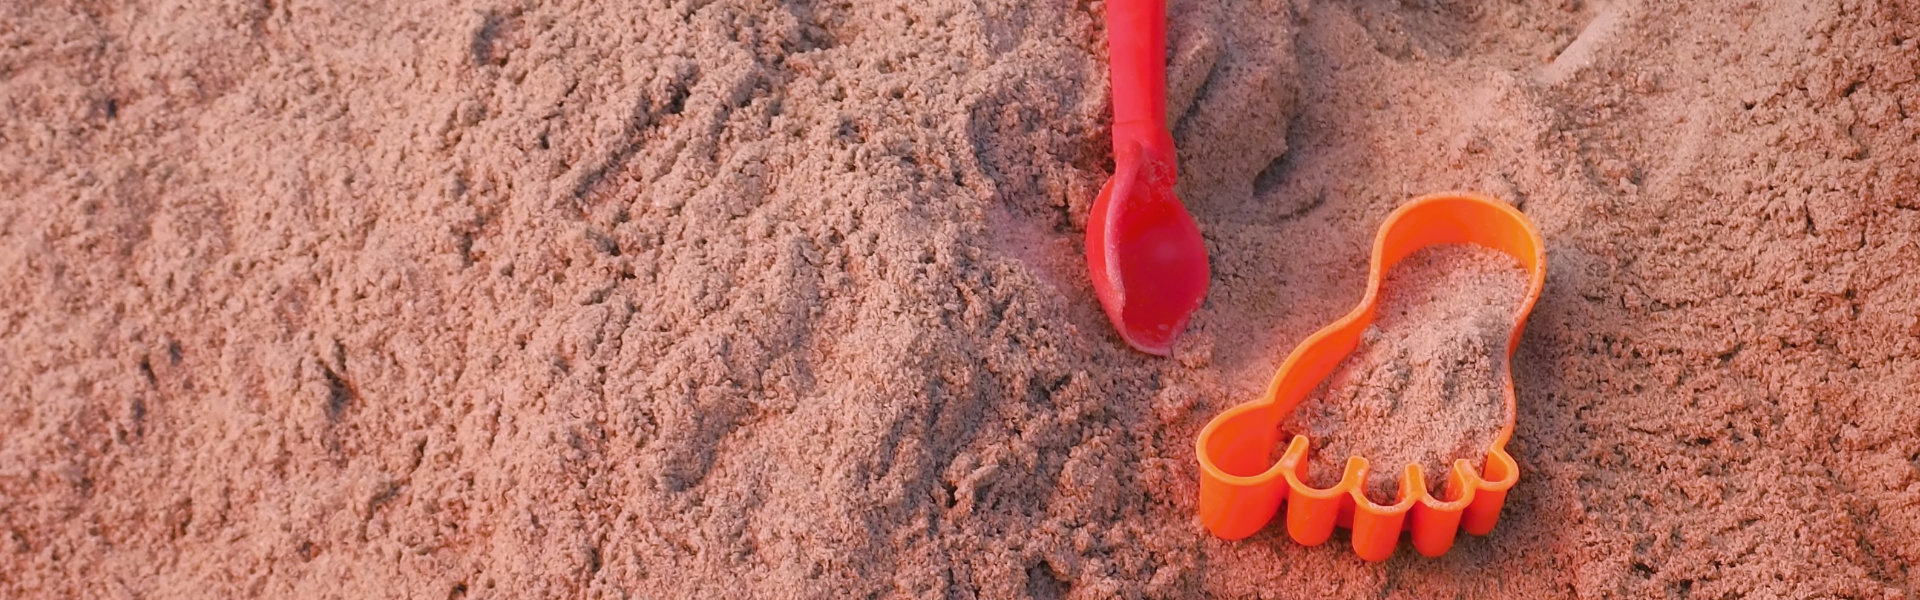 Childrens toys in a sandpit.